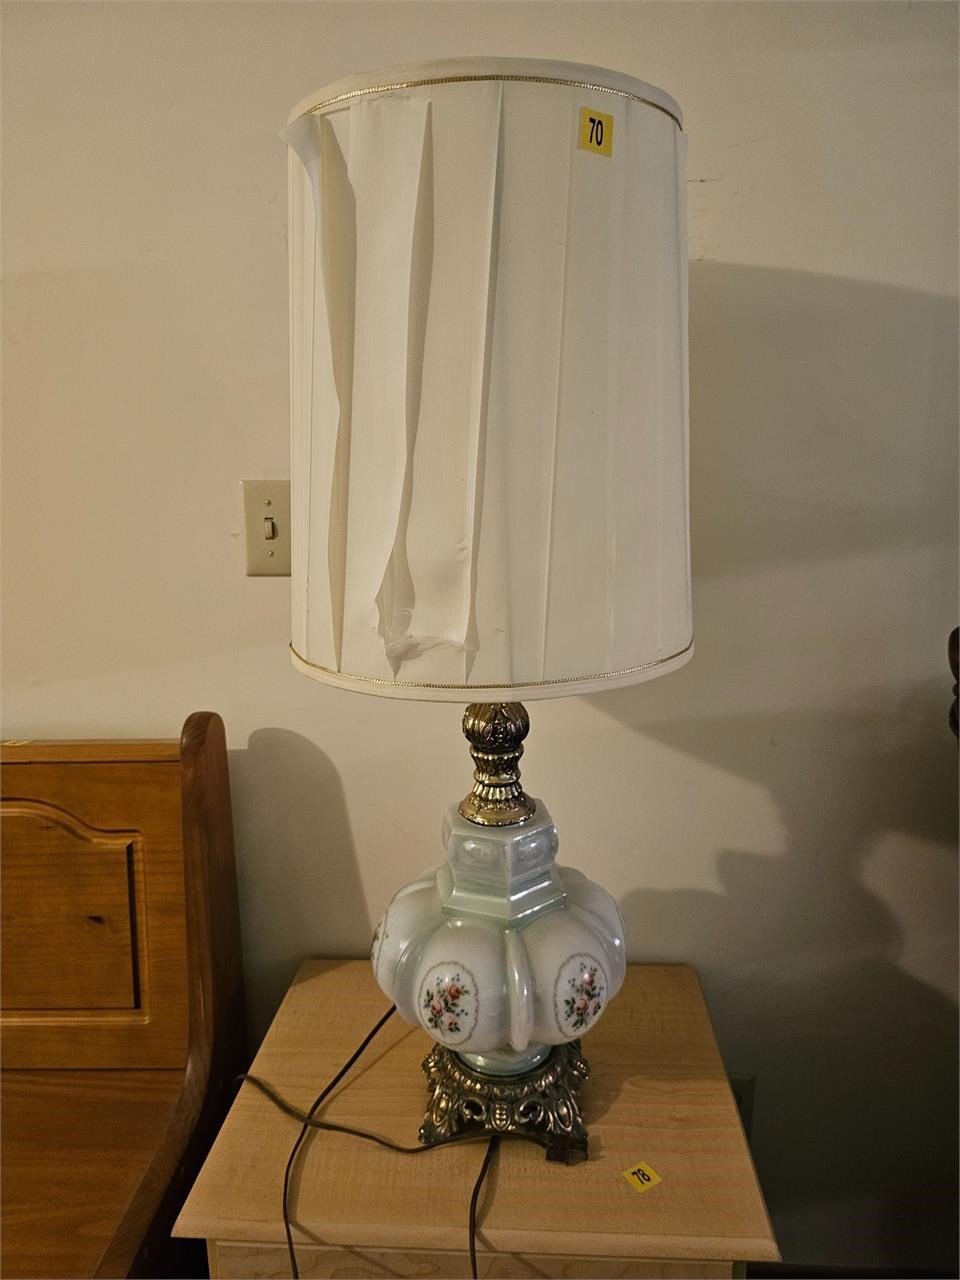 Globe table lamp